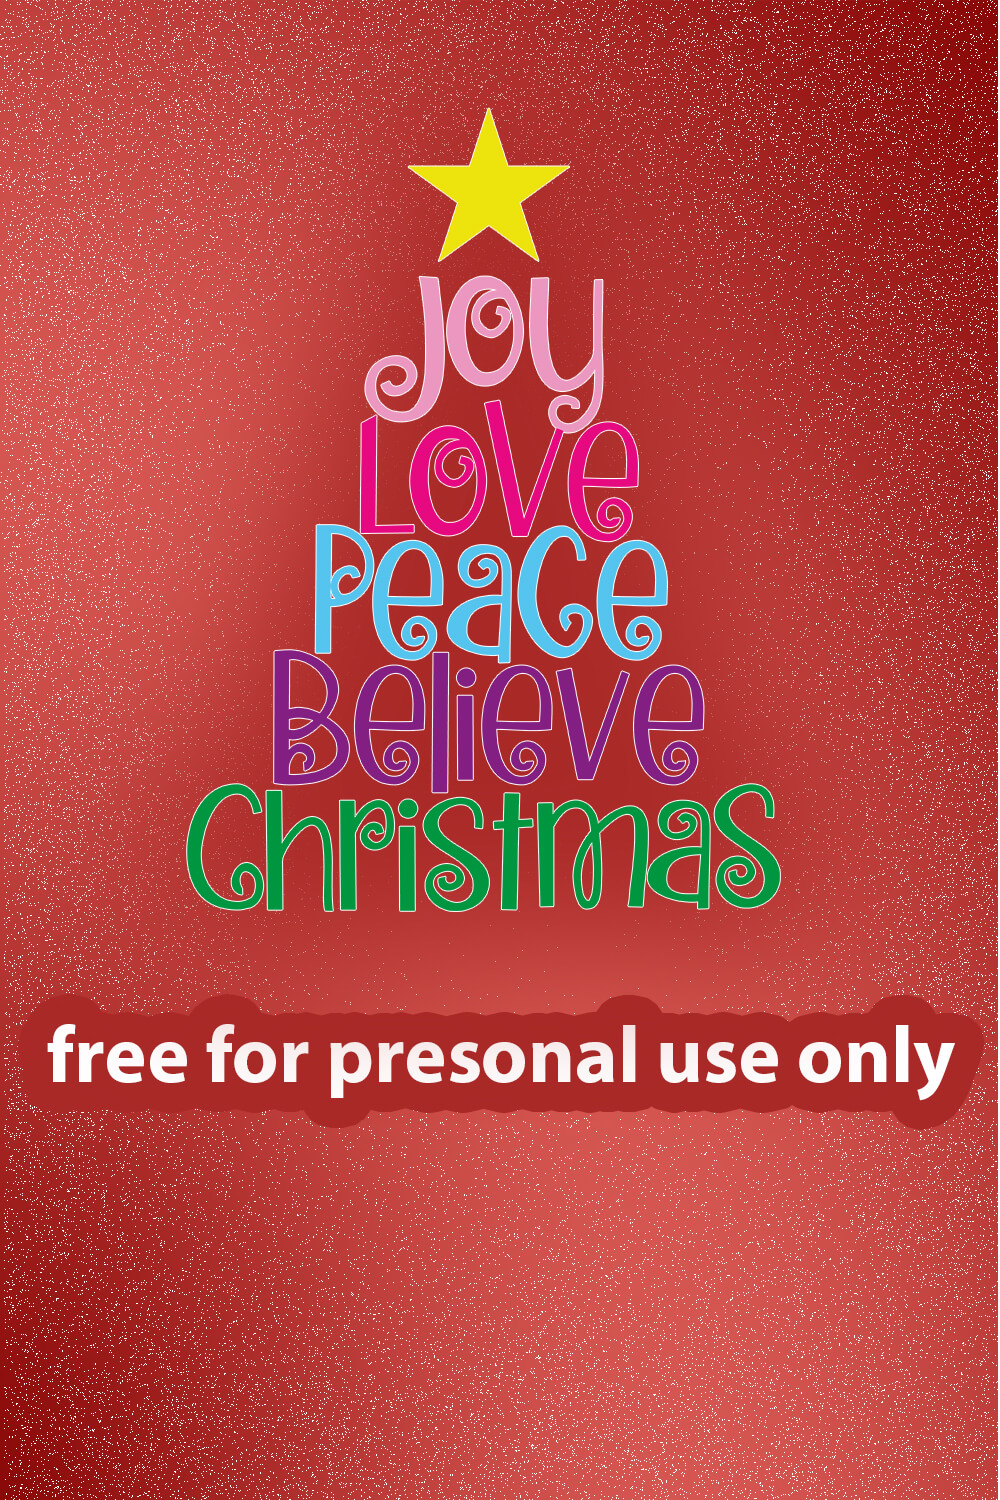 Joy love peace believe Christmas free SVG files pinterest image.